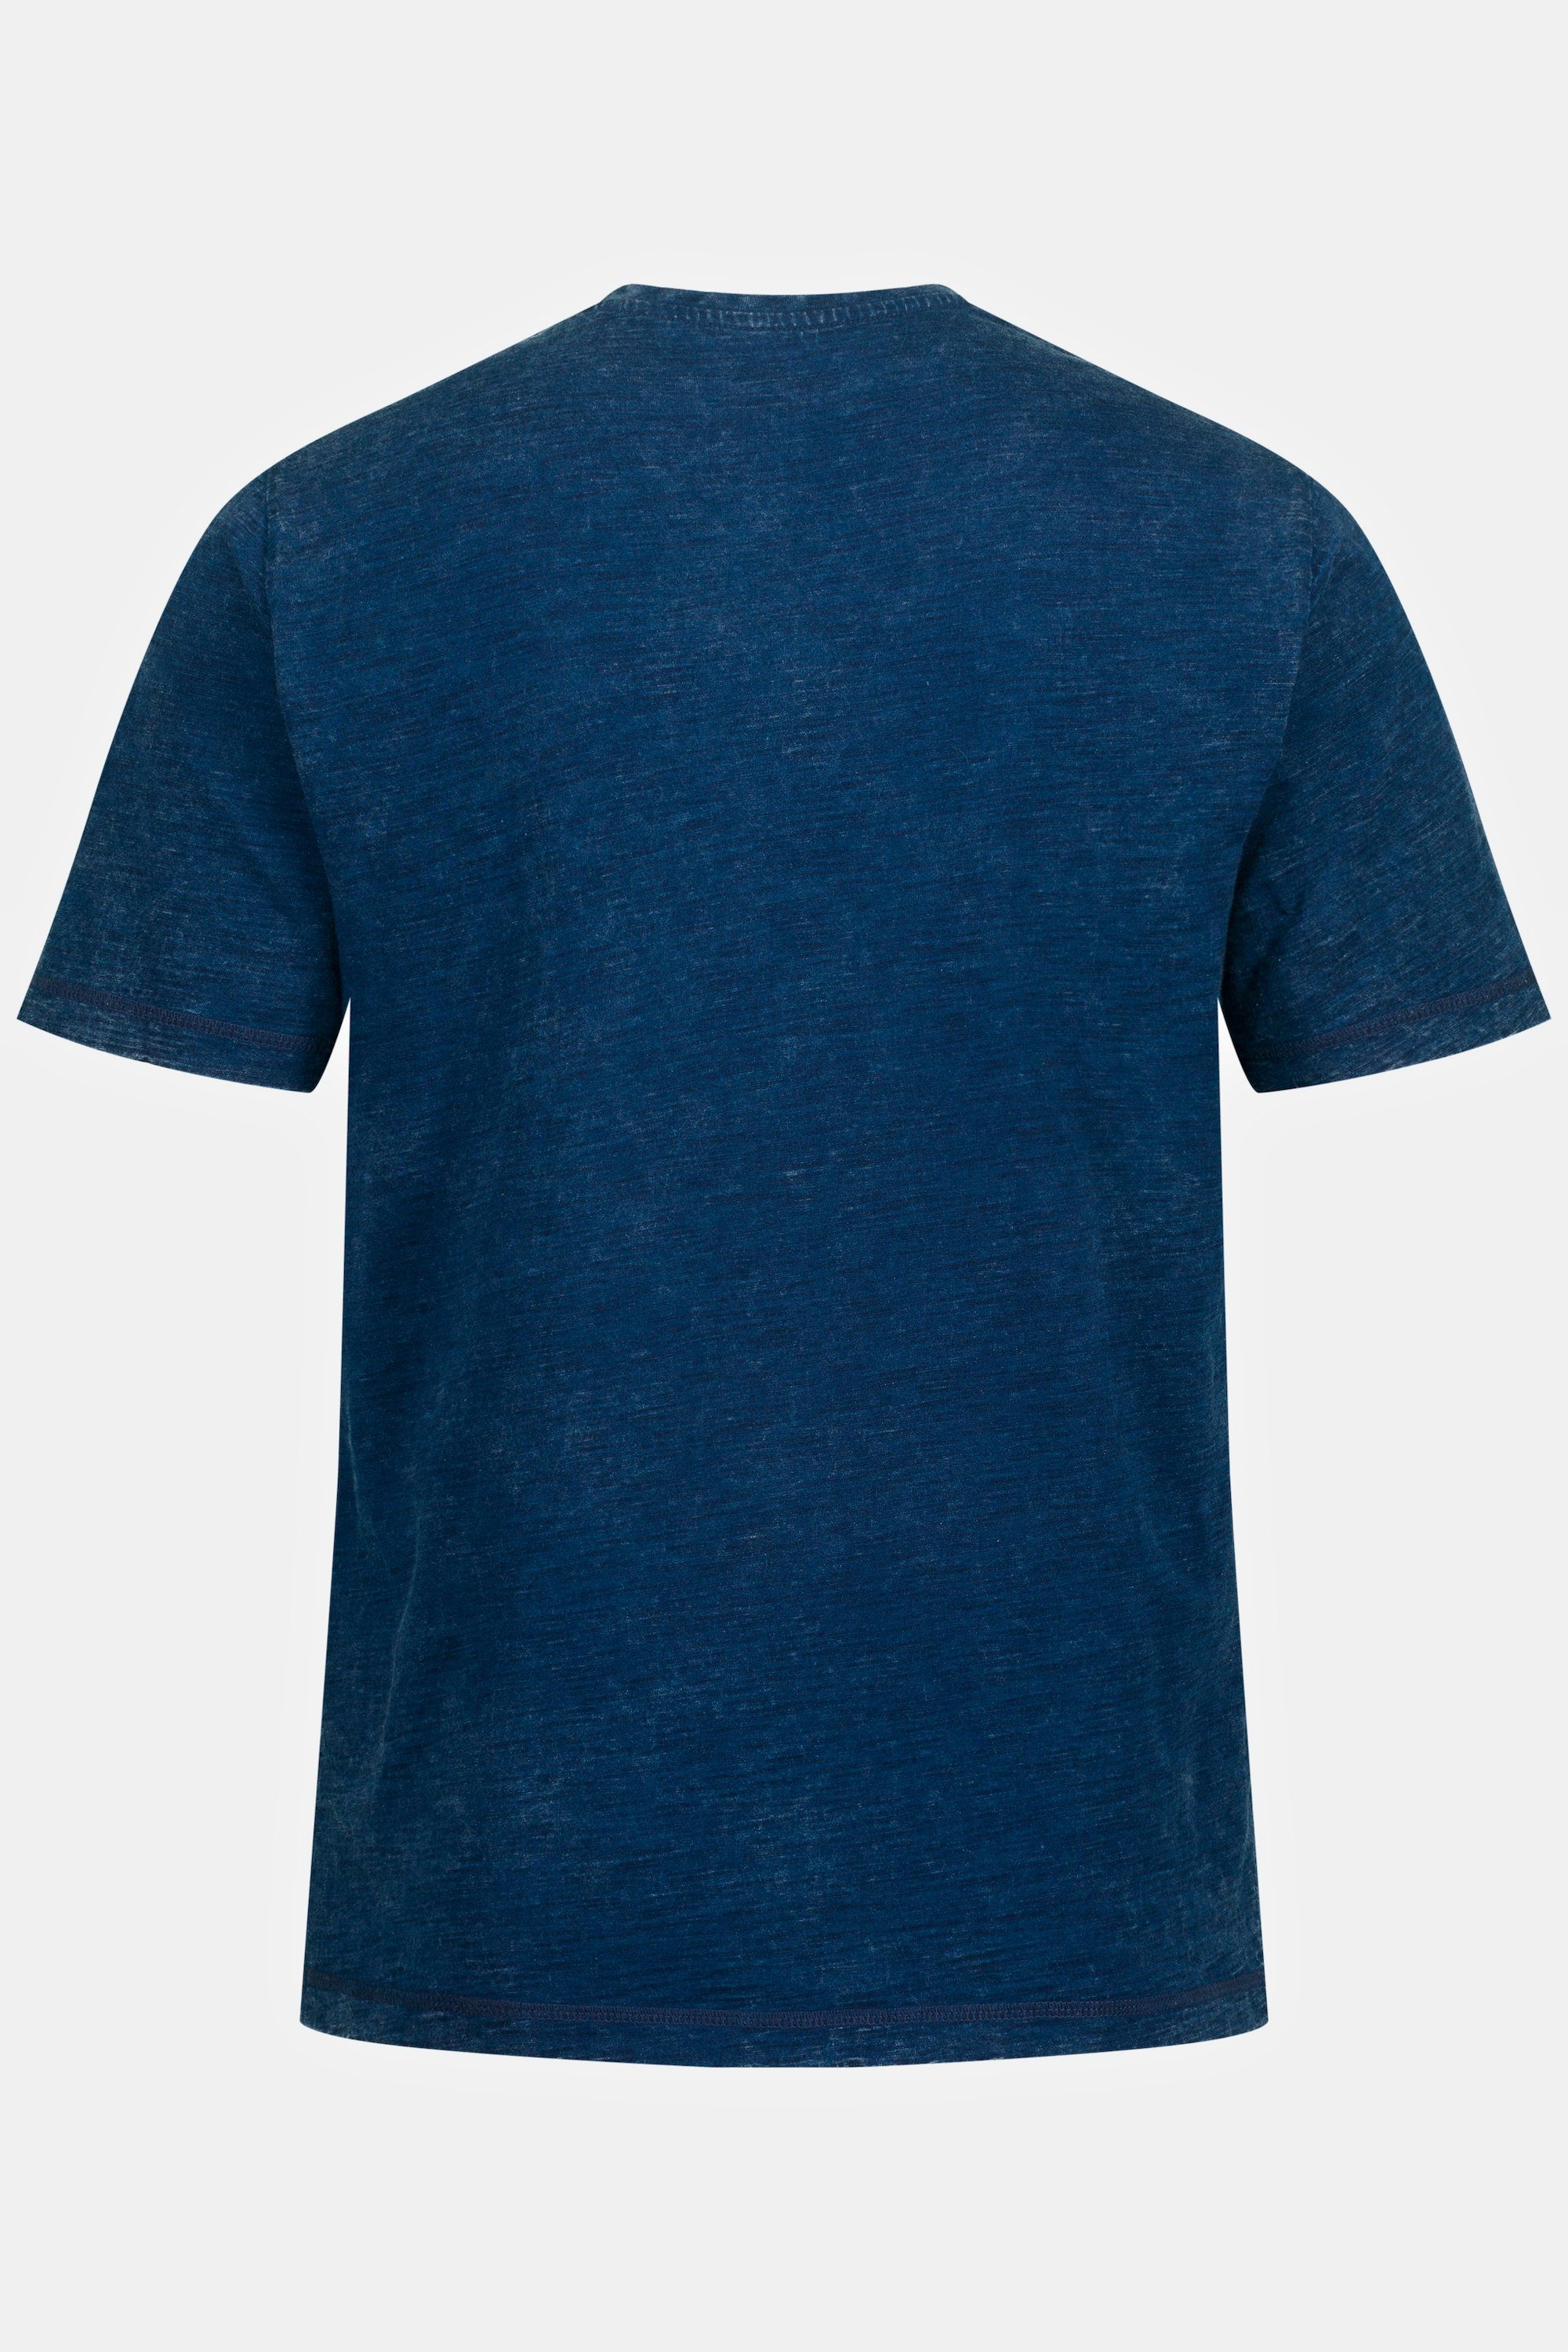 T-Shirt Print T-Shirt Indigo-Färbung JP1880 Rundhals Halbarm